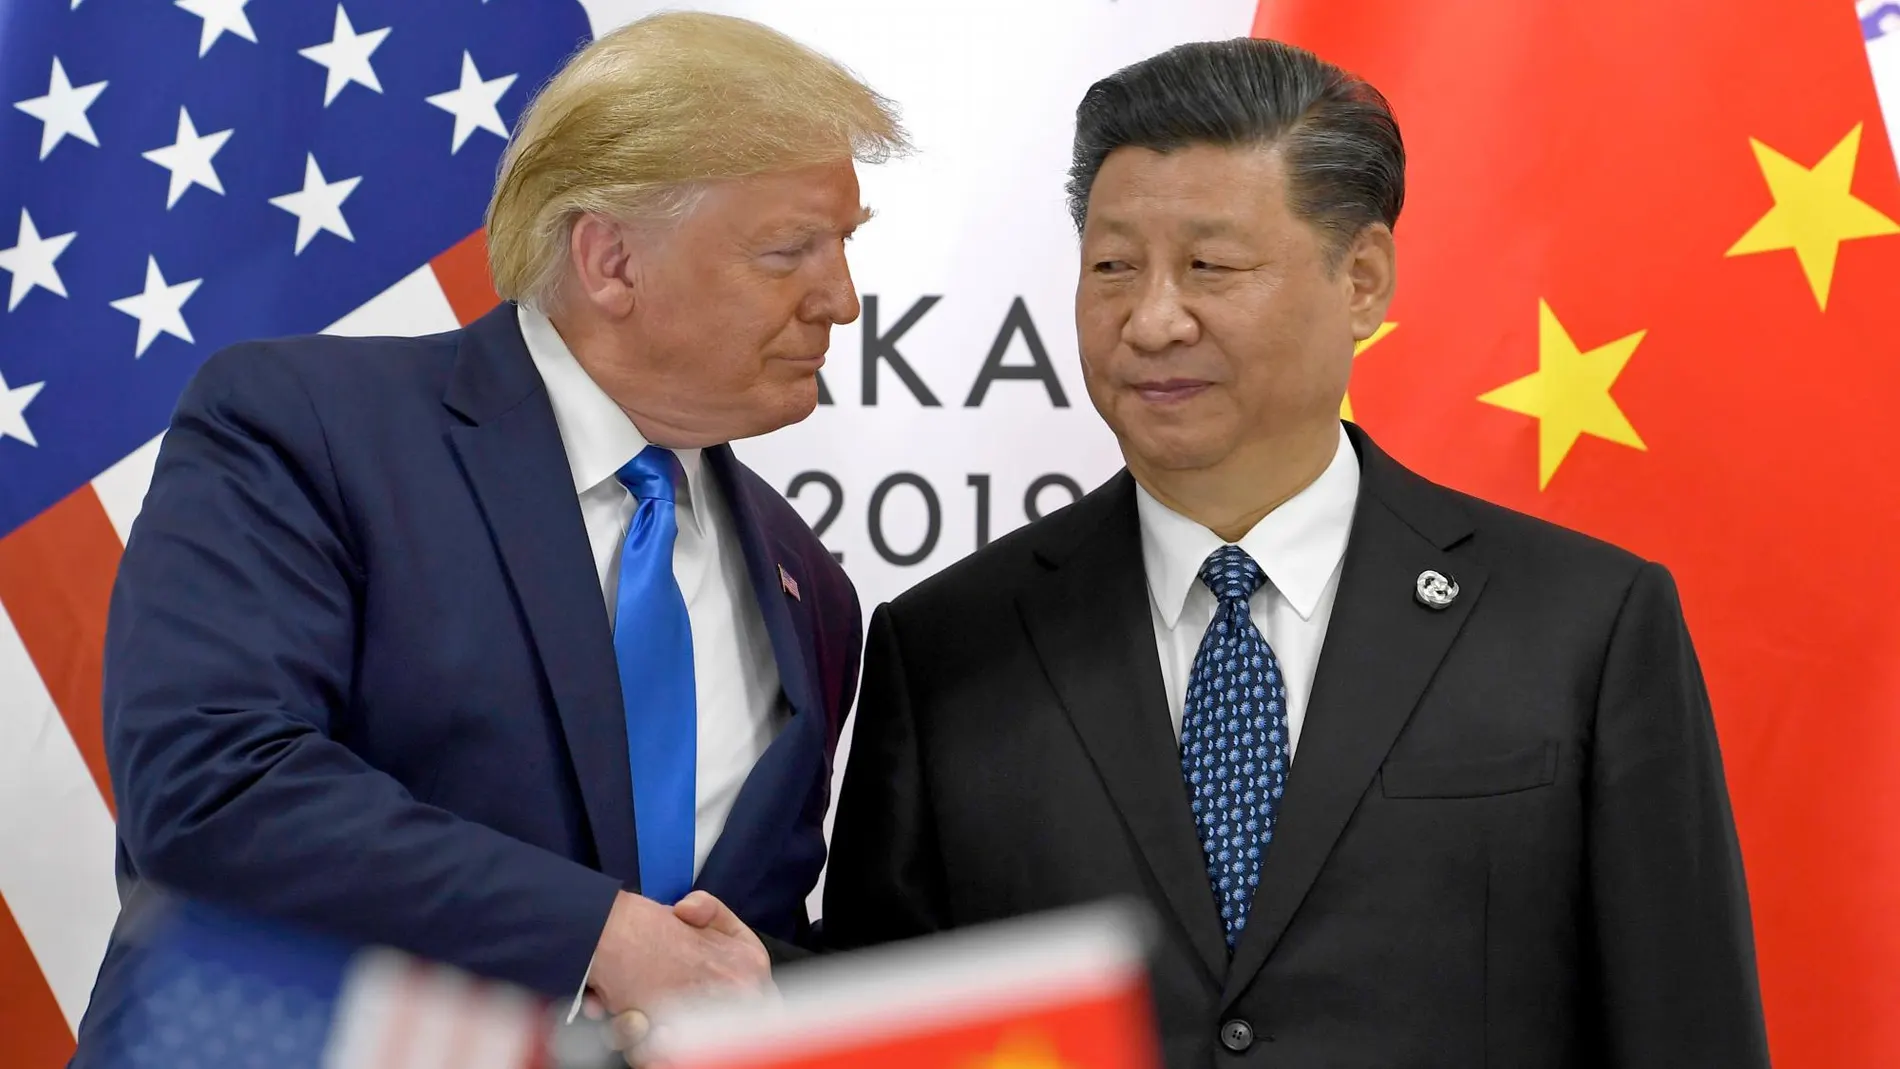 Donald Trump y Xi Jinping, en un encuentro en Osaka